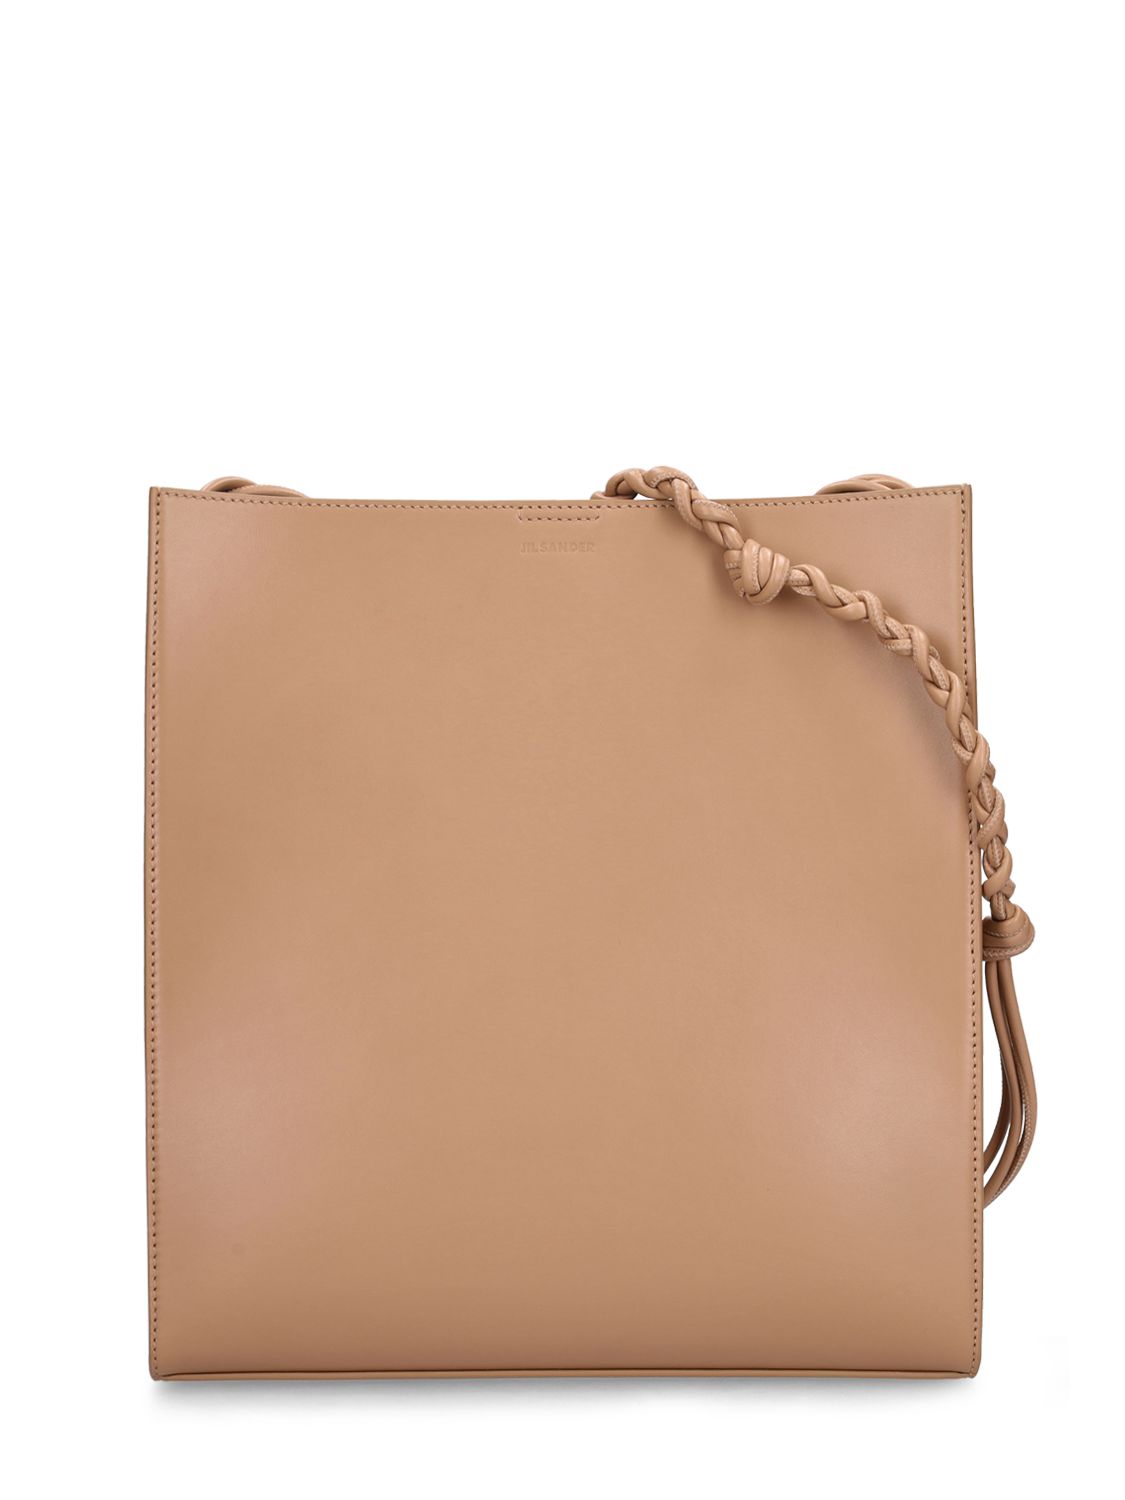 Medium Tangle Leather Crossbody Bag